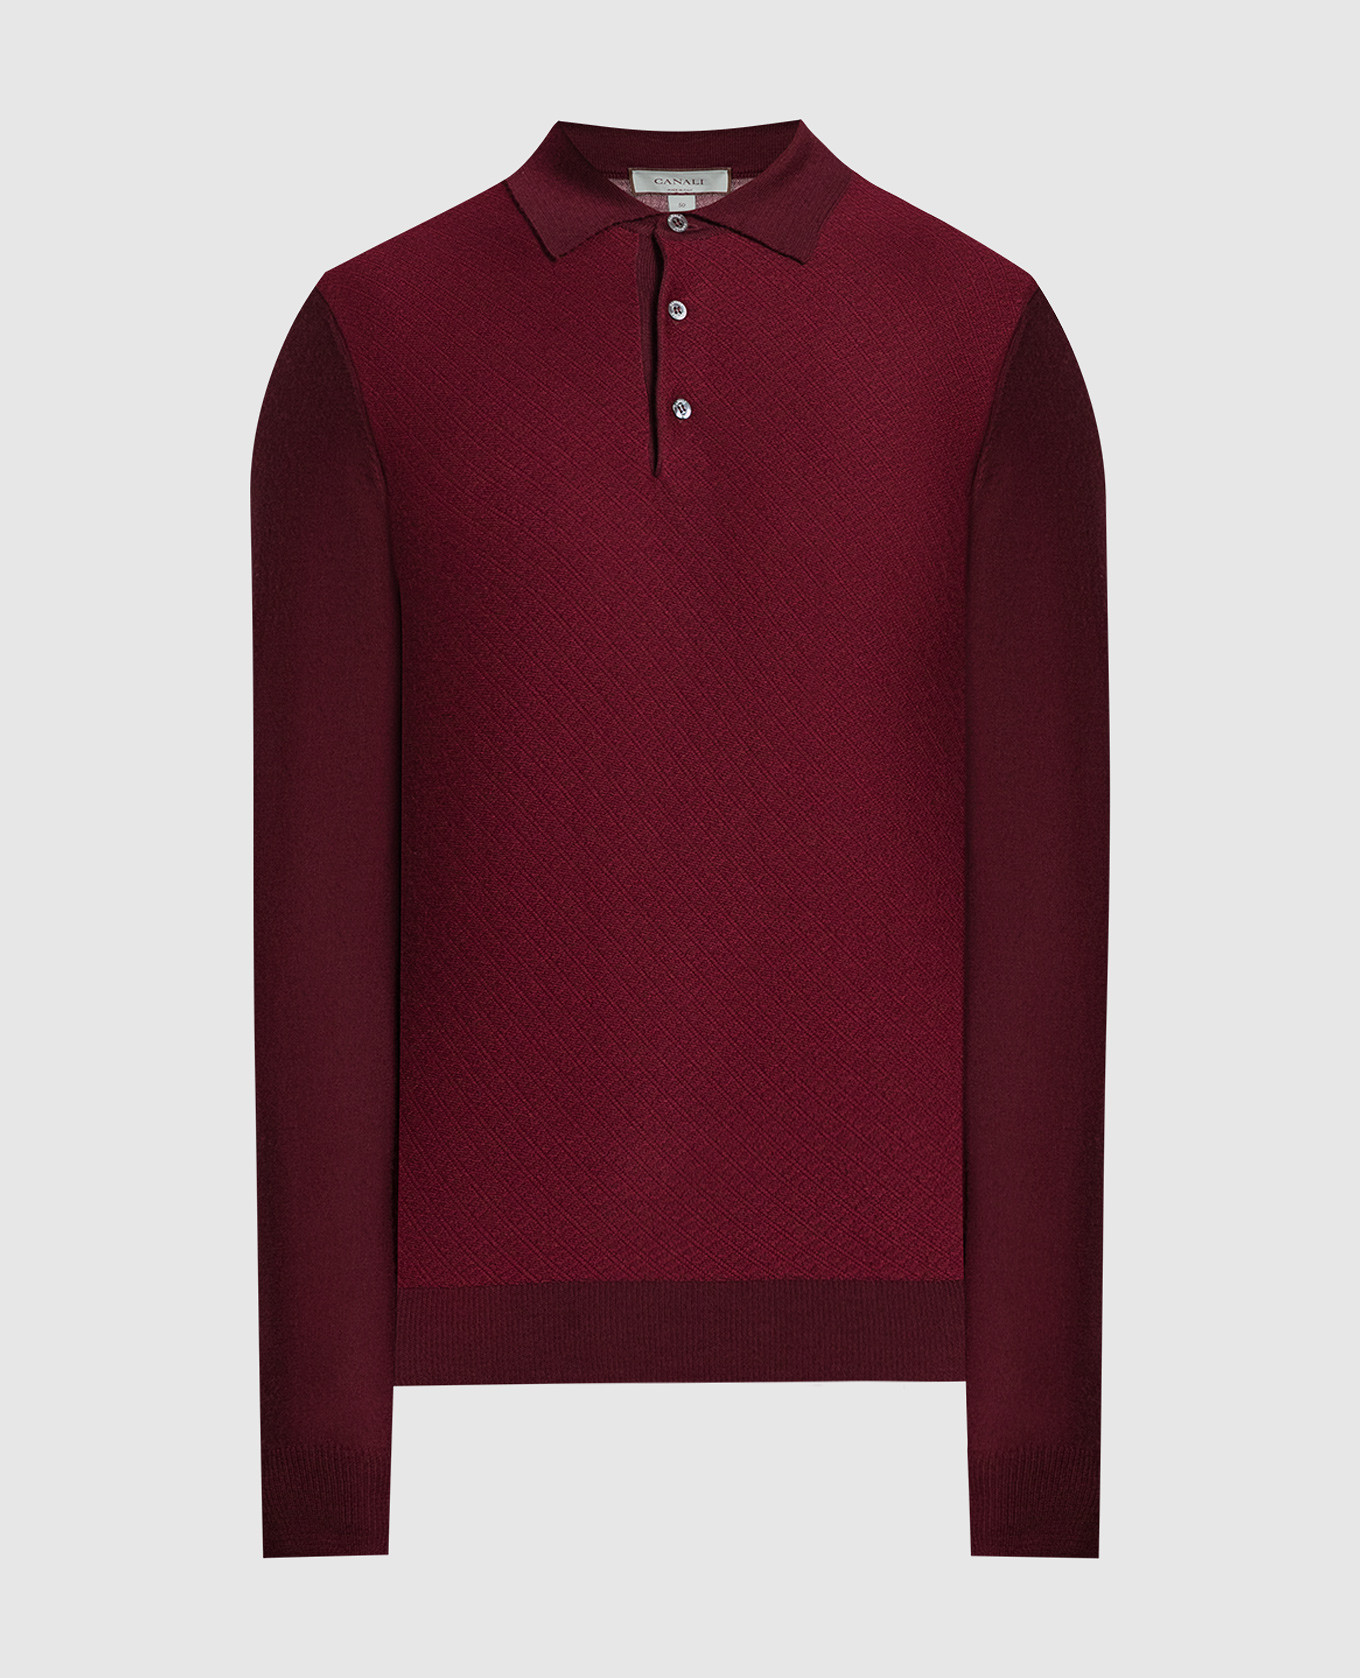 Burgundy polo shirt made of wool